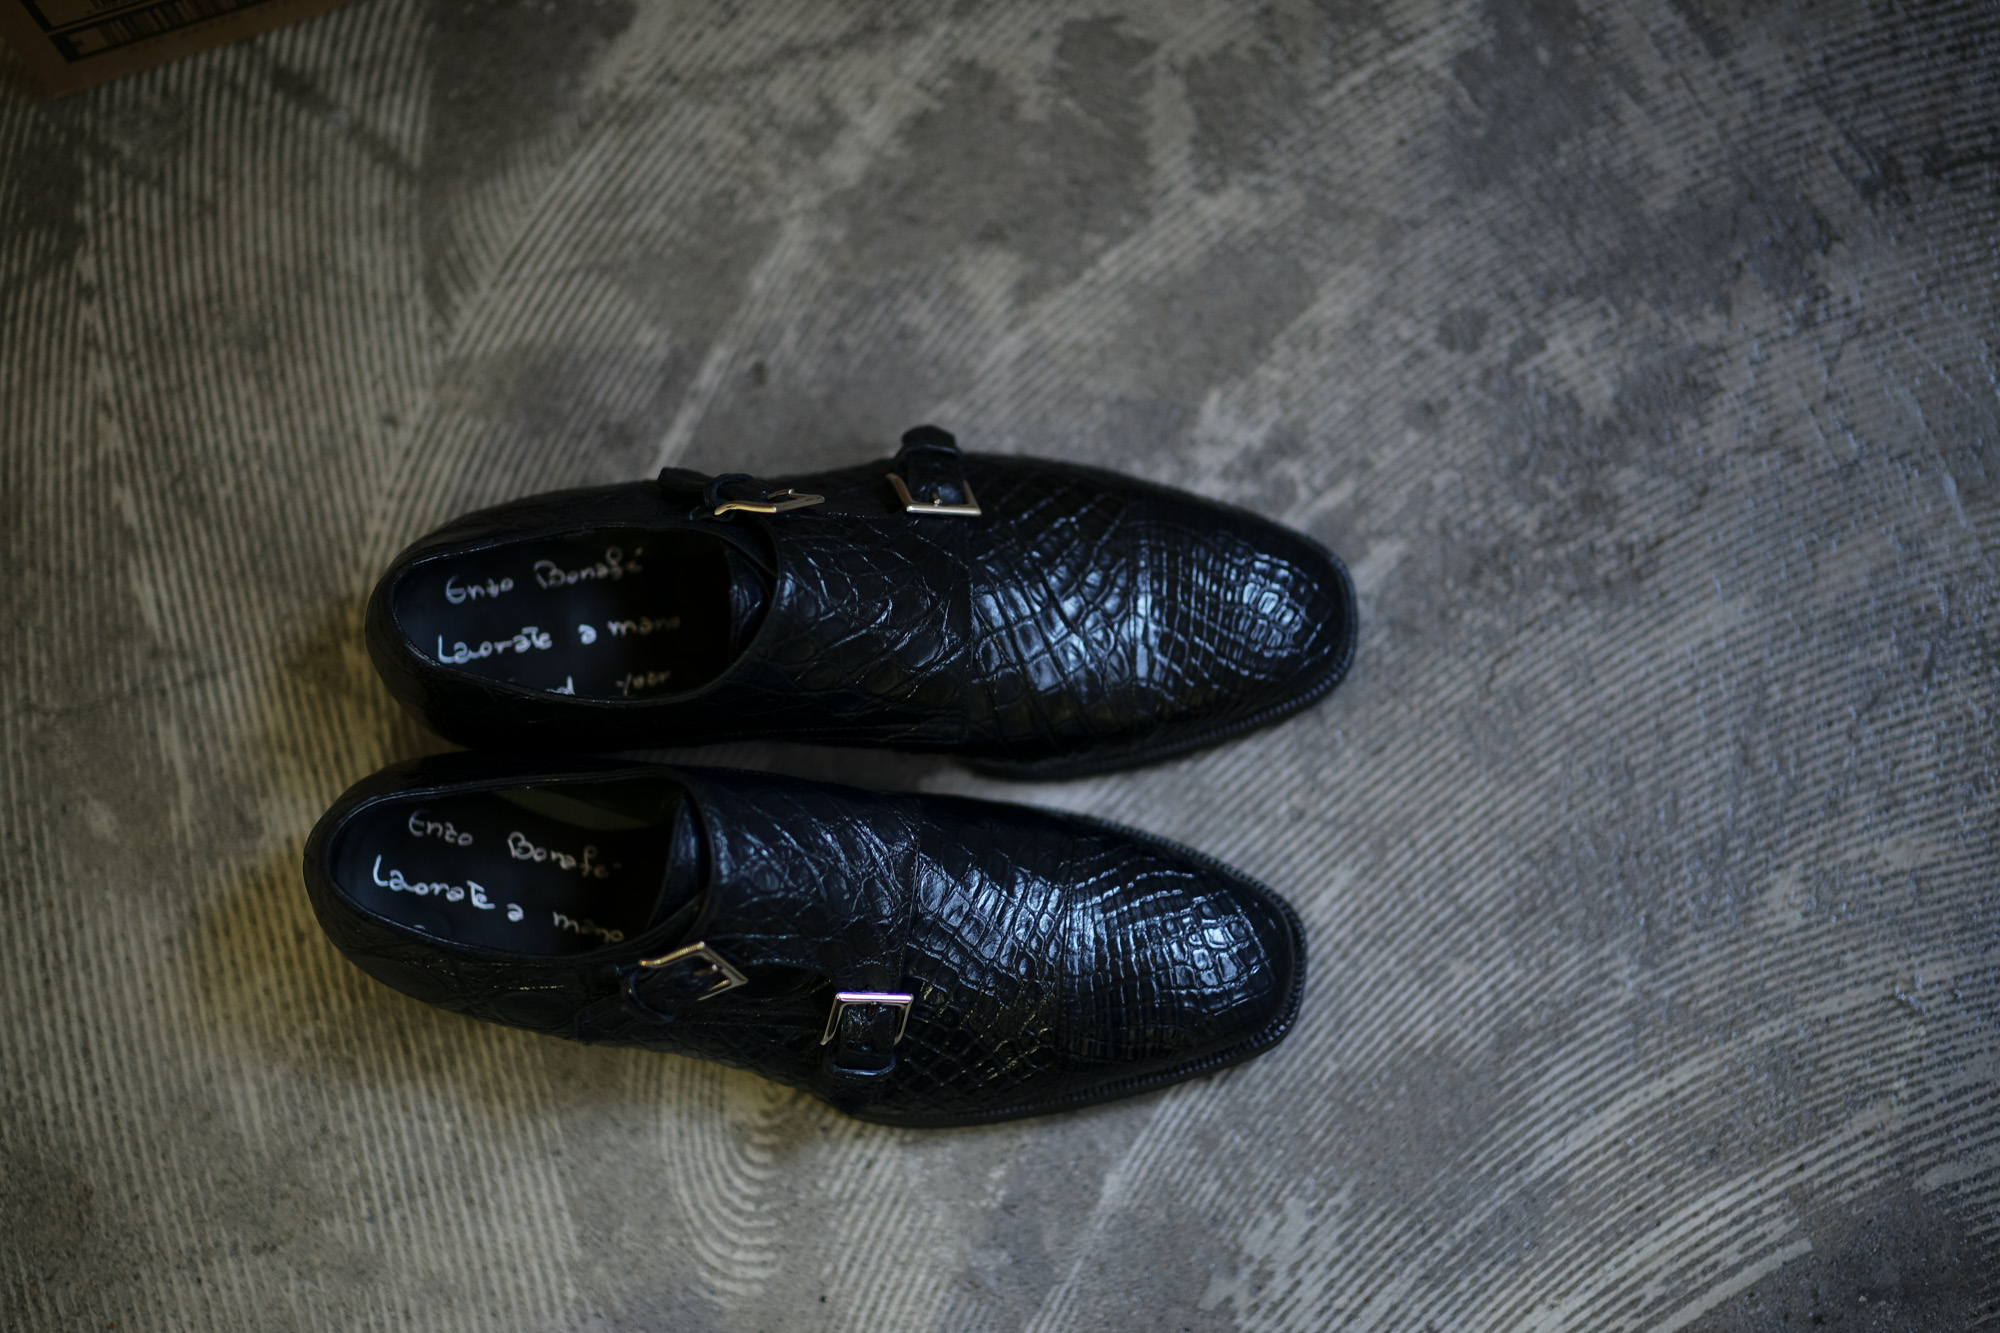 ENZO BONAFE(エンツォボナフェ) ART.EB-02 double monk strap shoes Crocodile Leather クロコダイル  エキゾチックレザー ダブルモンクストラップシューズ NERO(ブラック) made in italy (イタリア製) 2019 秋冬 【Special Model】enzobonafe eb02 愛知 名古屋 altoediritto アルトエデリット  ダブルモンク